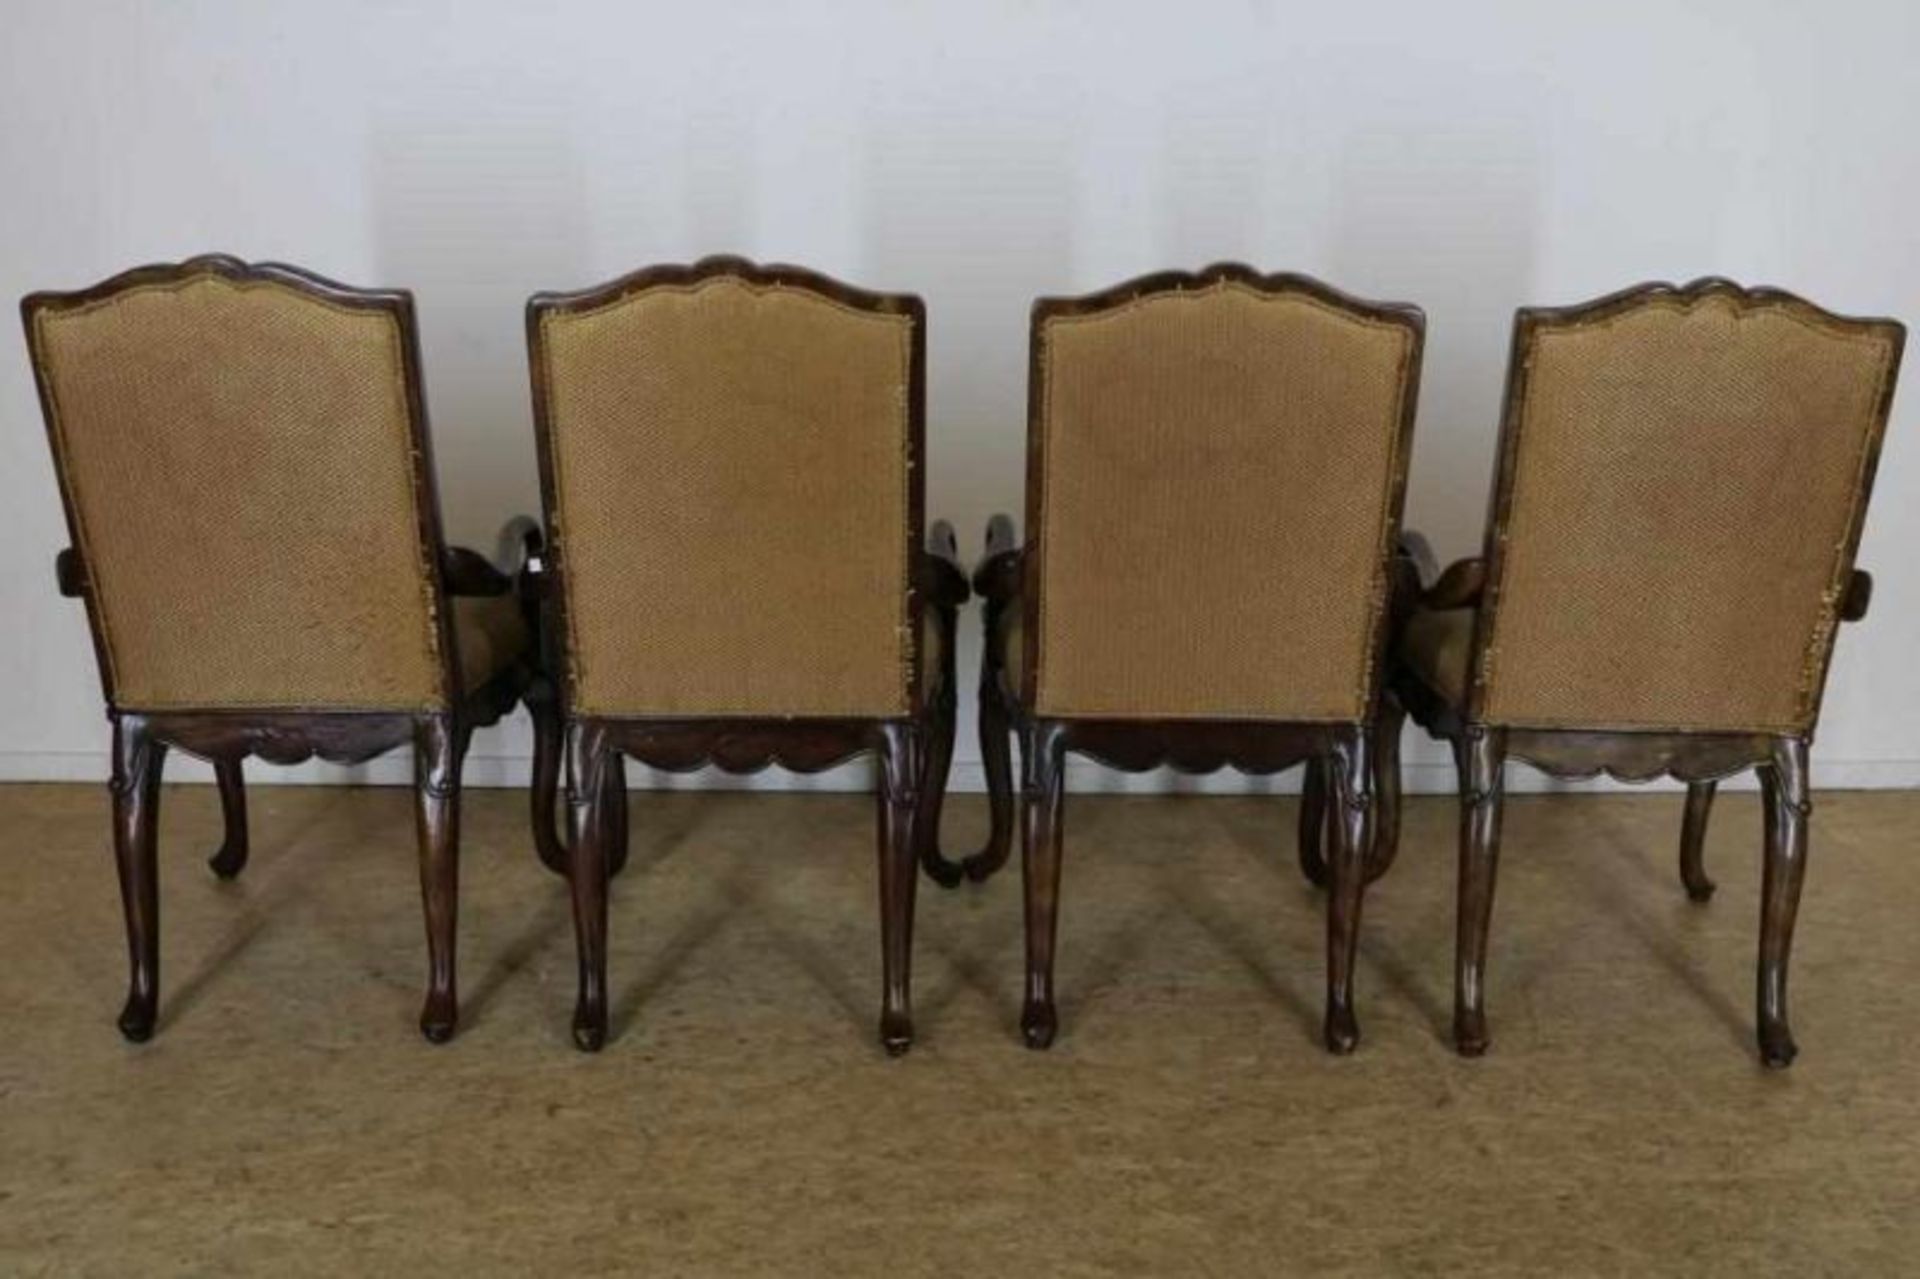 Serie van 4 Georgian-stijl armstoelen met bruine bekleding. - Bild 4 aus 4